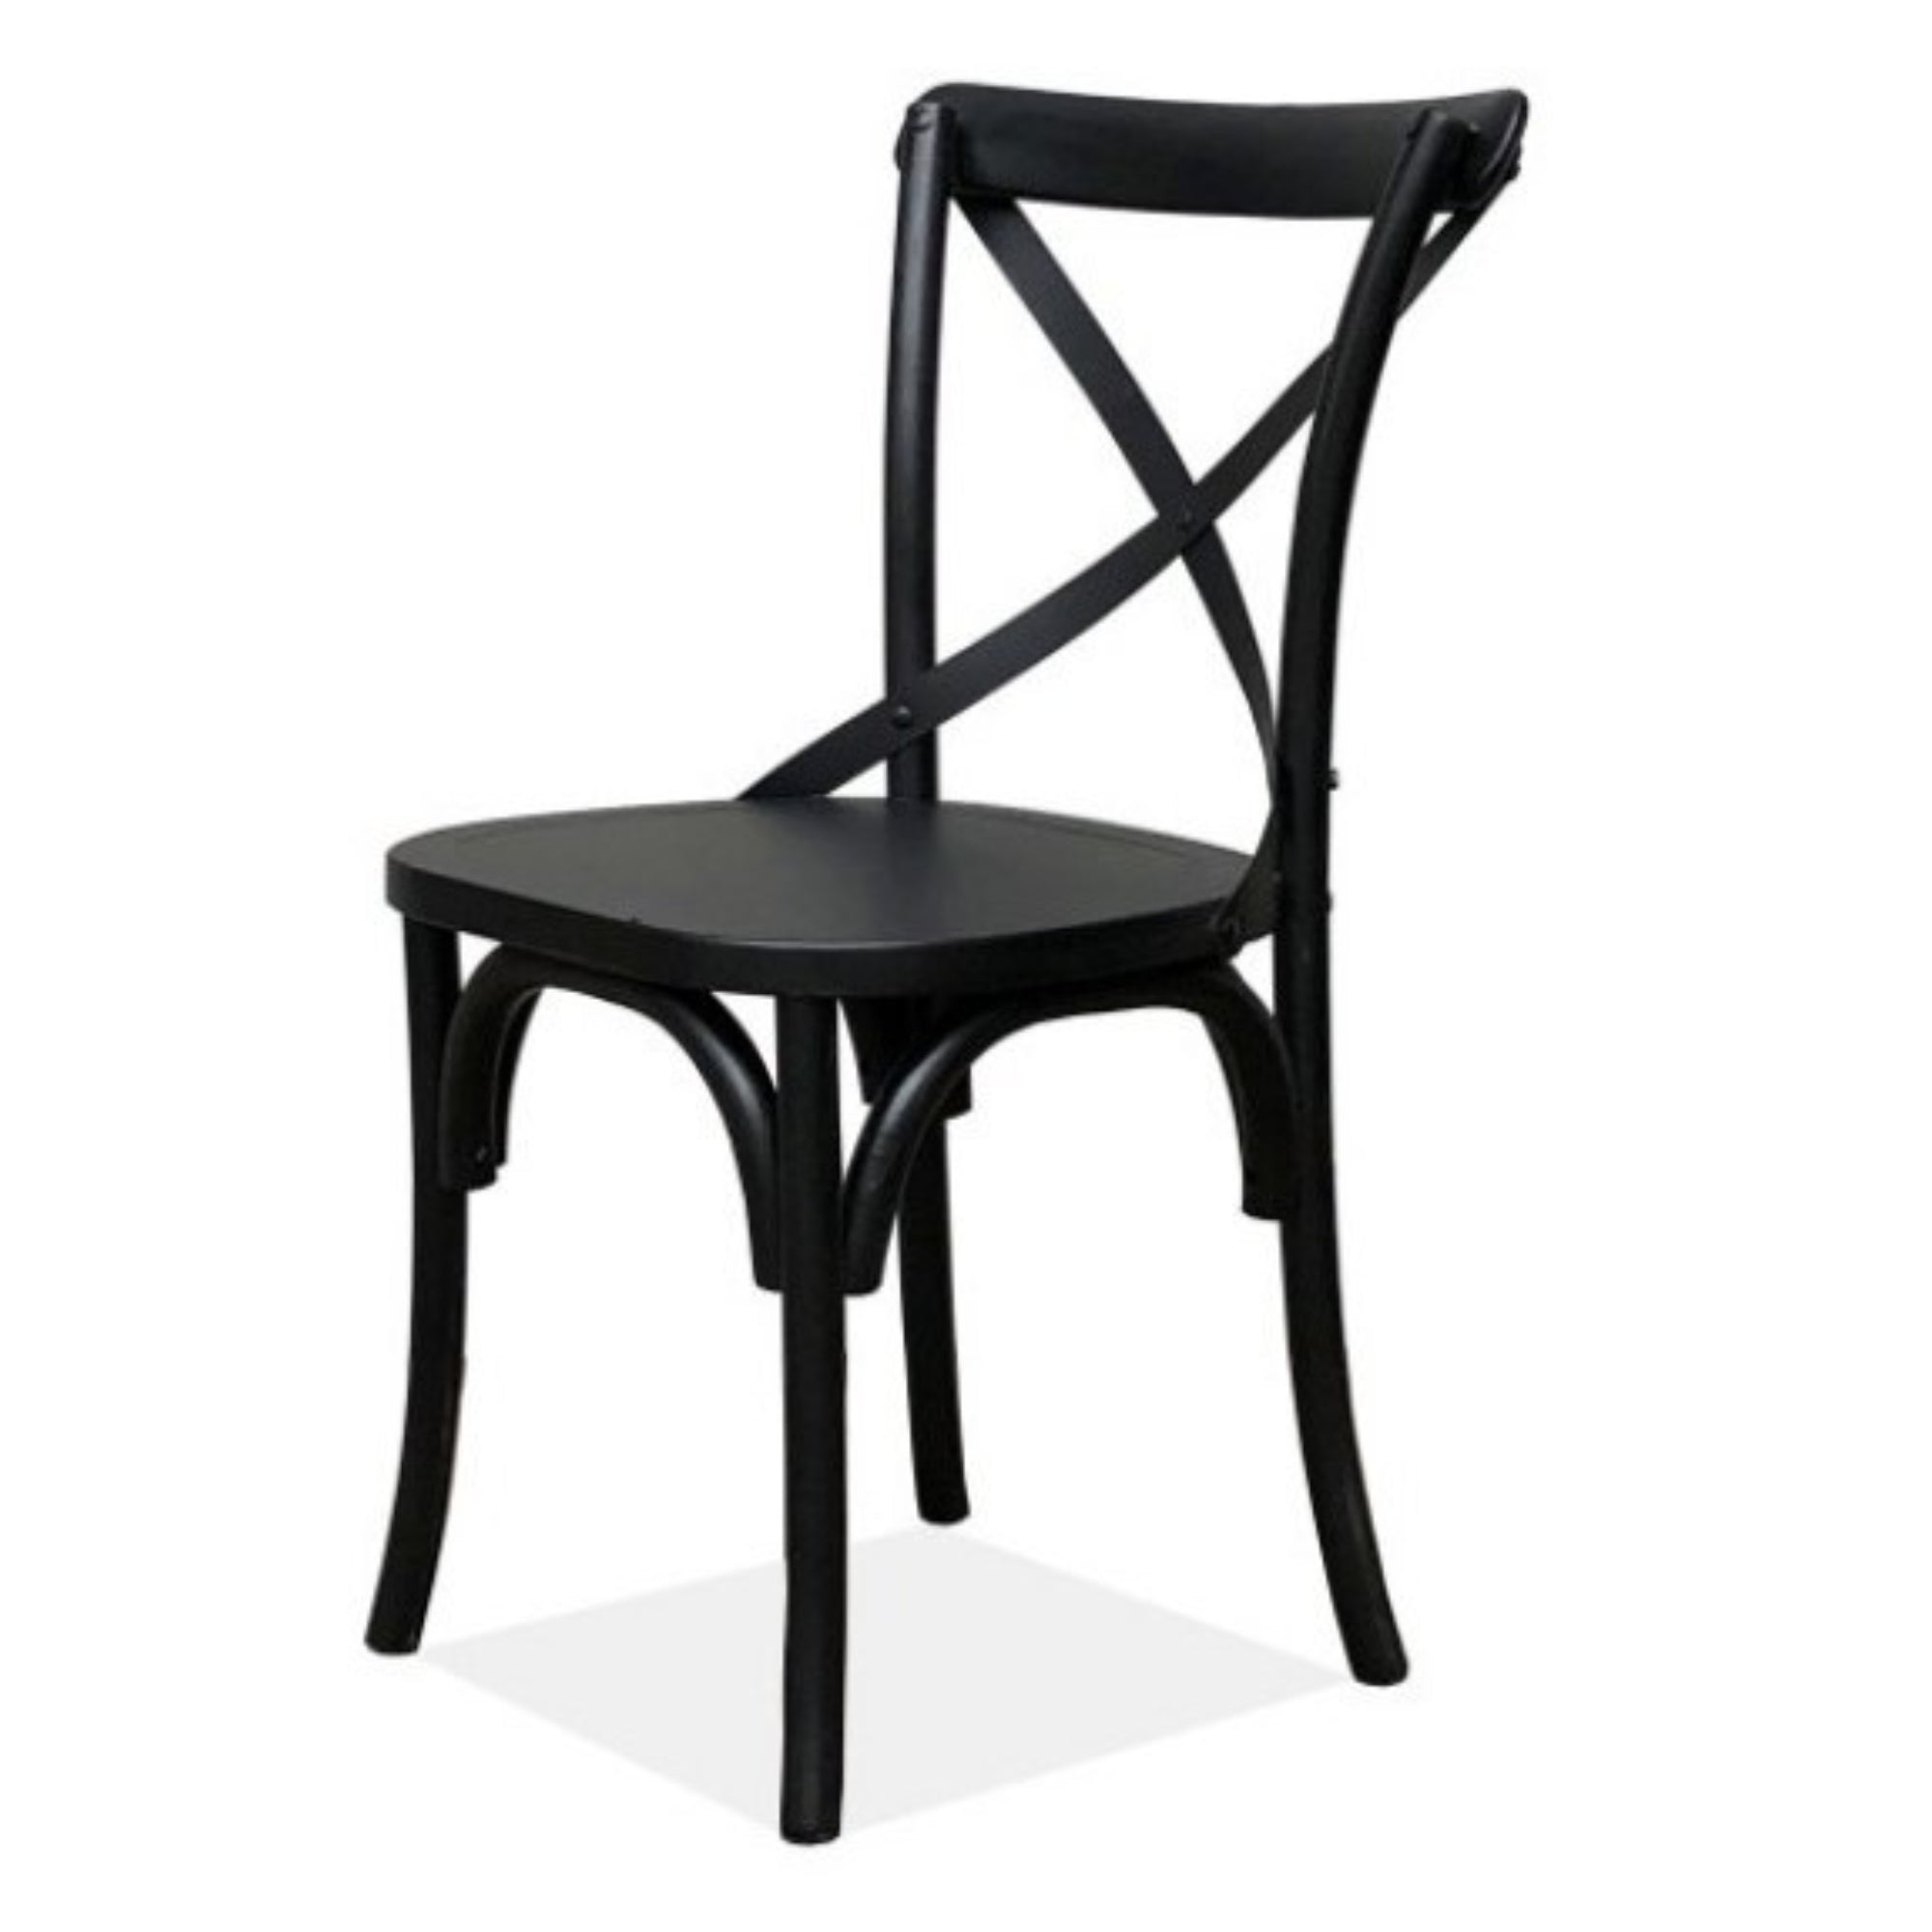 2pc X-Back Dining Chairs Birchwood Seat Metal Legs Black